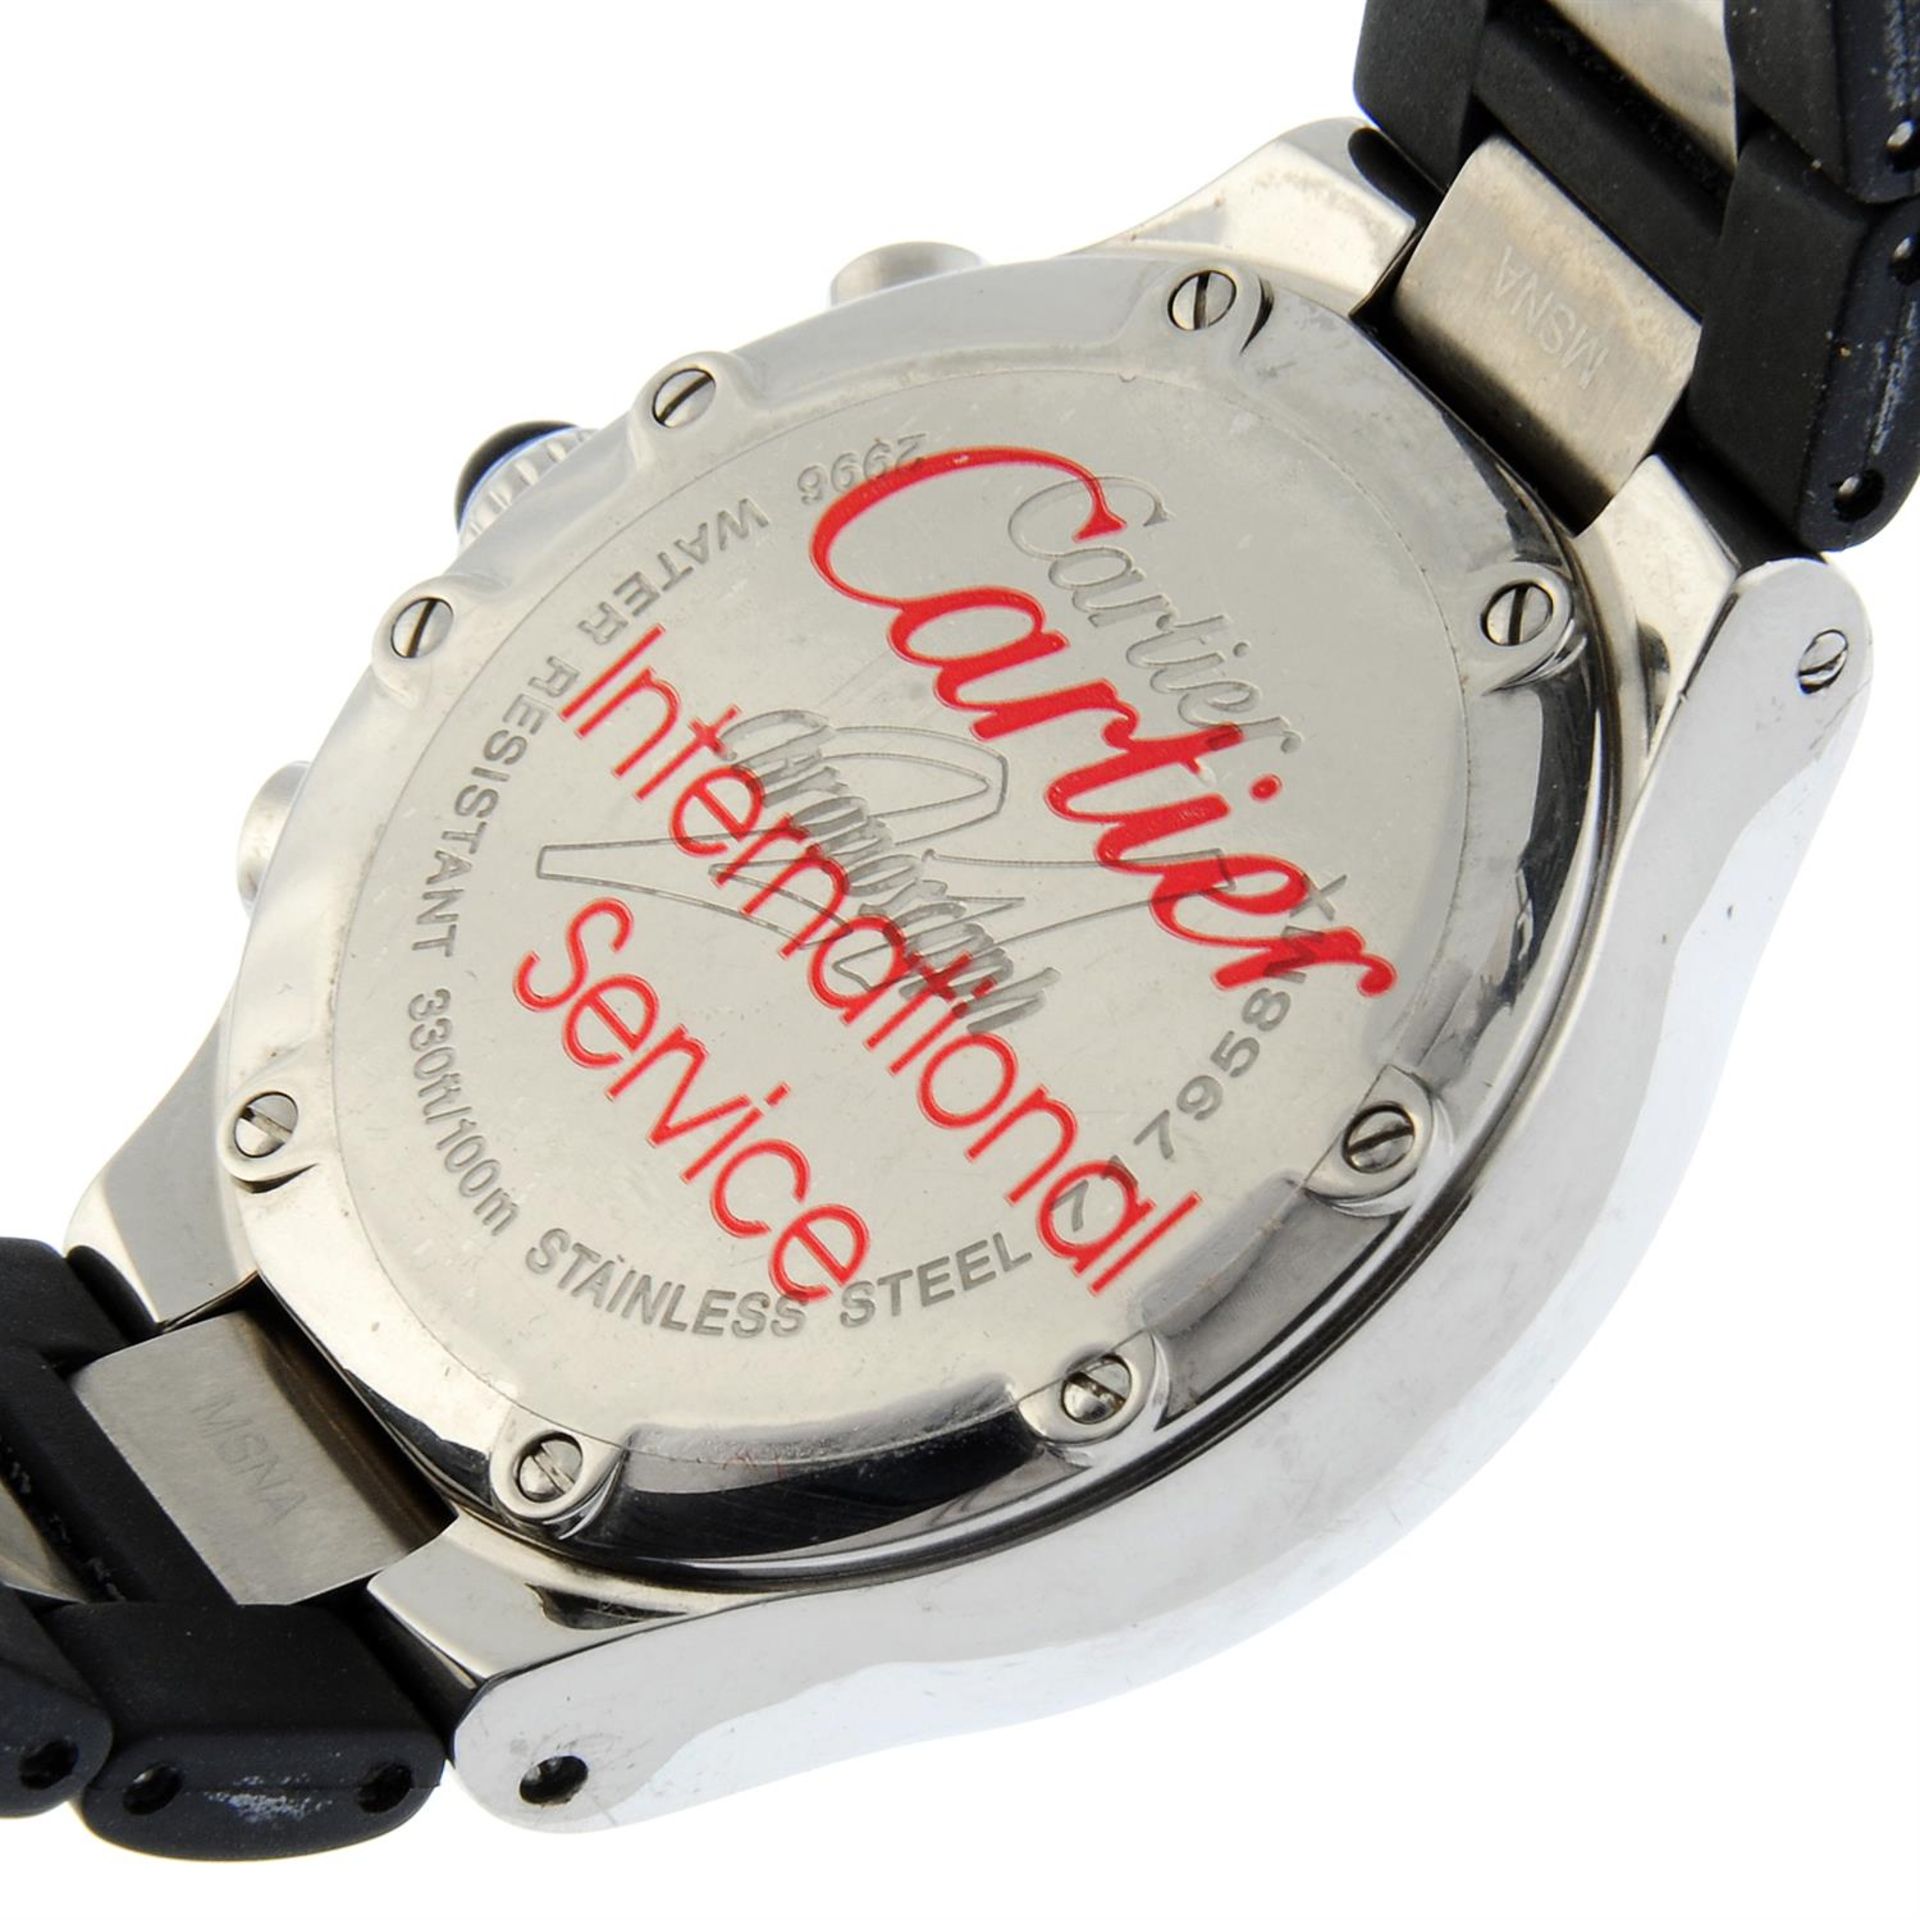 Cartier - a Chronoscaph 21 watch, 32mm. - Image 4 of 5